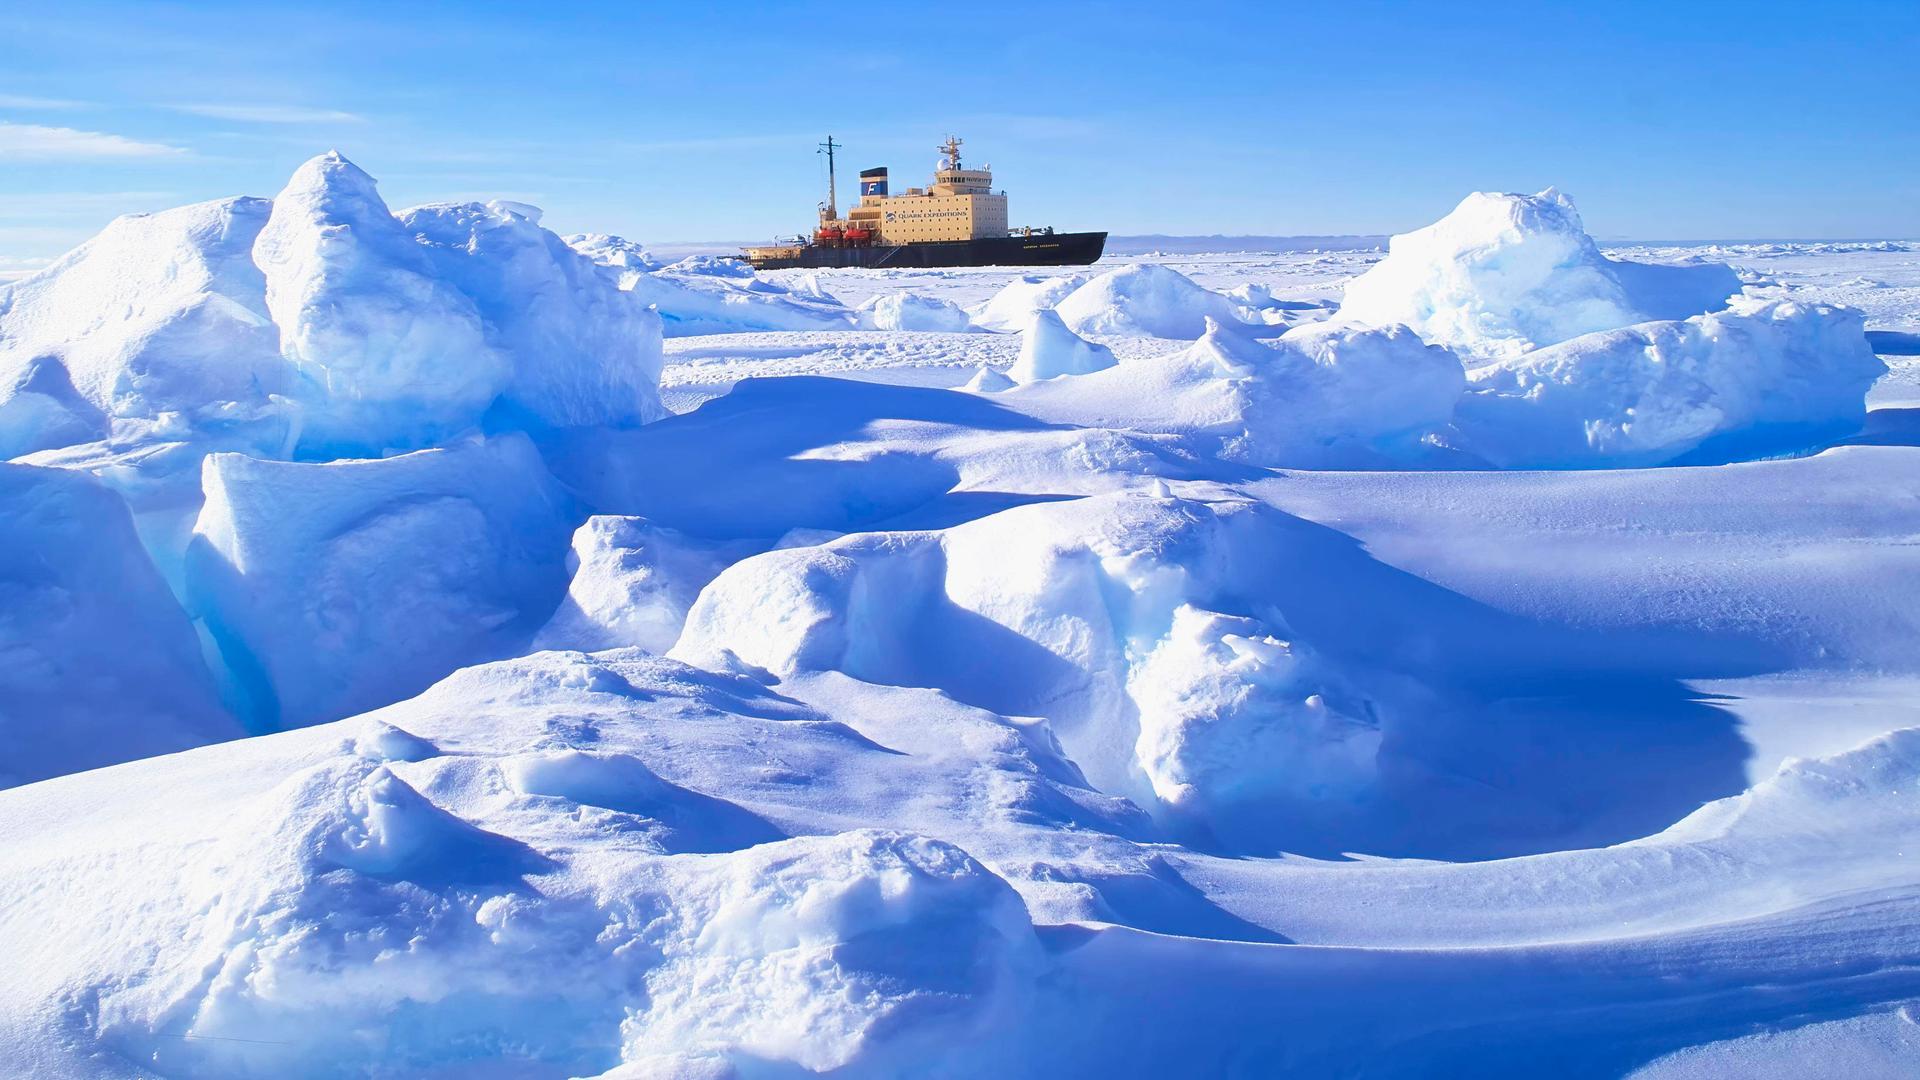 Russischer Eisbrecher Kapitan Khlebnikov geparkt im gefrorenen Meer am Drescher Inlet Iceport, Queen Maud Land, Weddellmeer, Antarktis